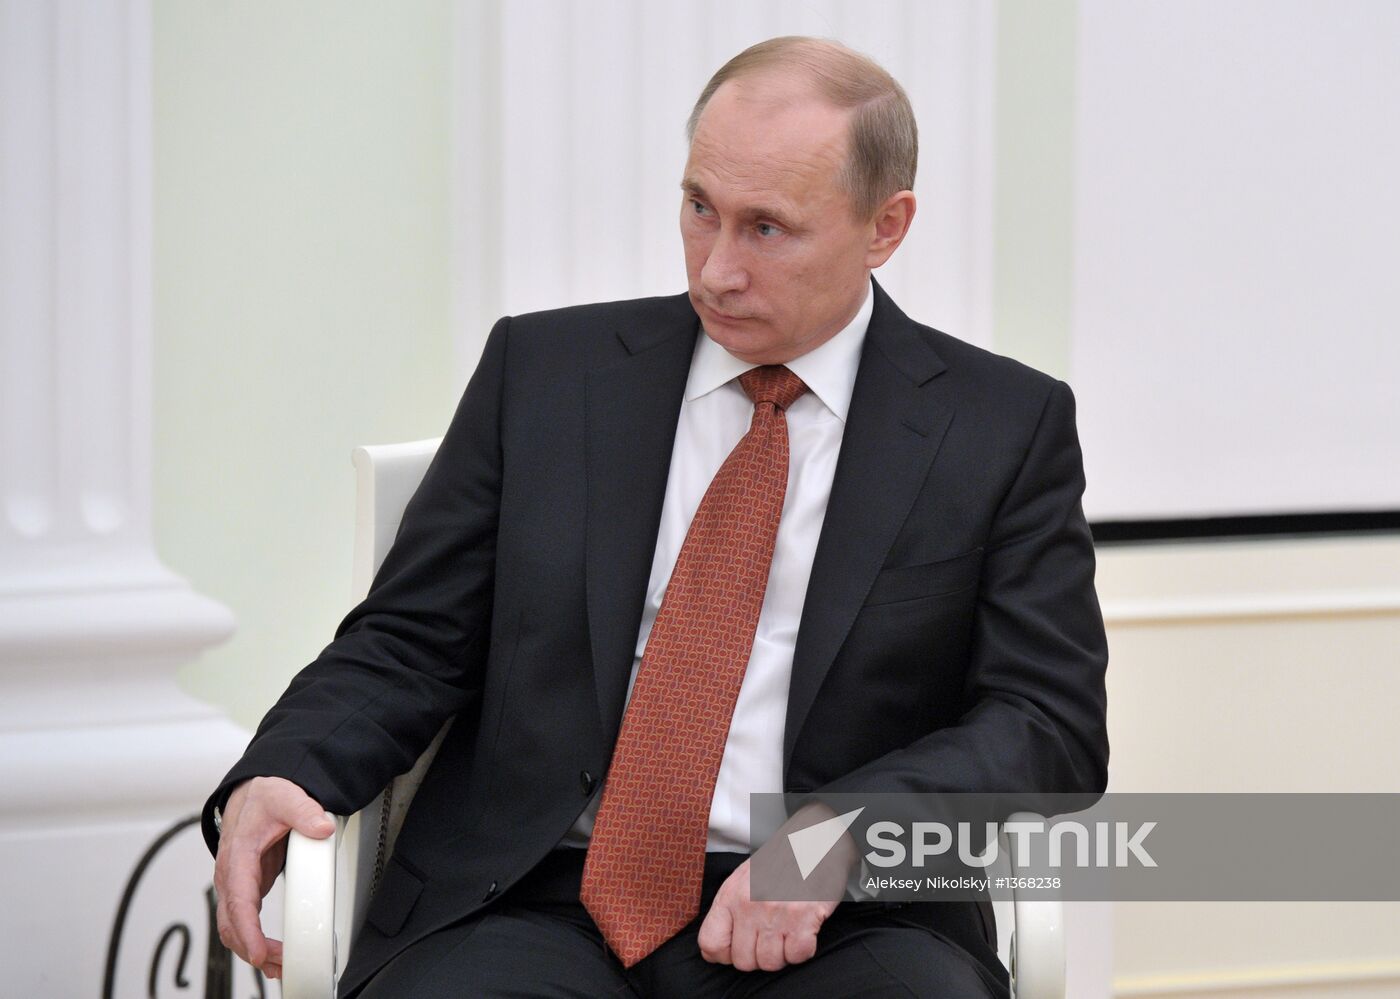 Vladimir Putin and Nursultan Nazarbayev meet in Kremlin